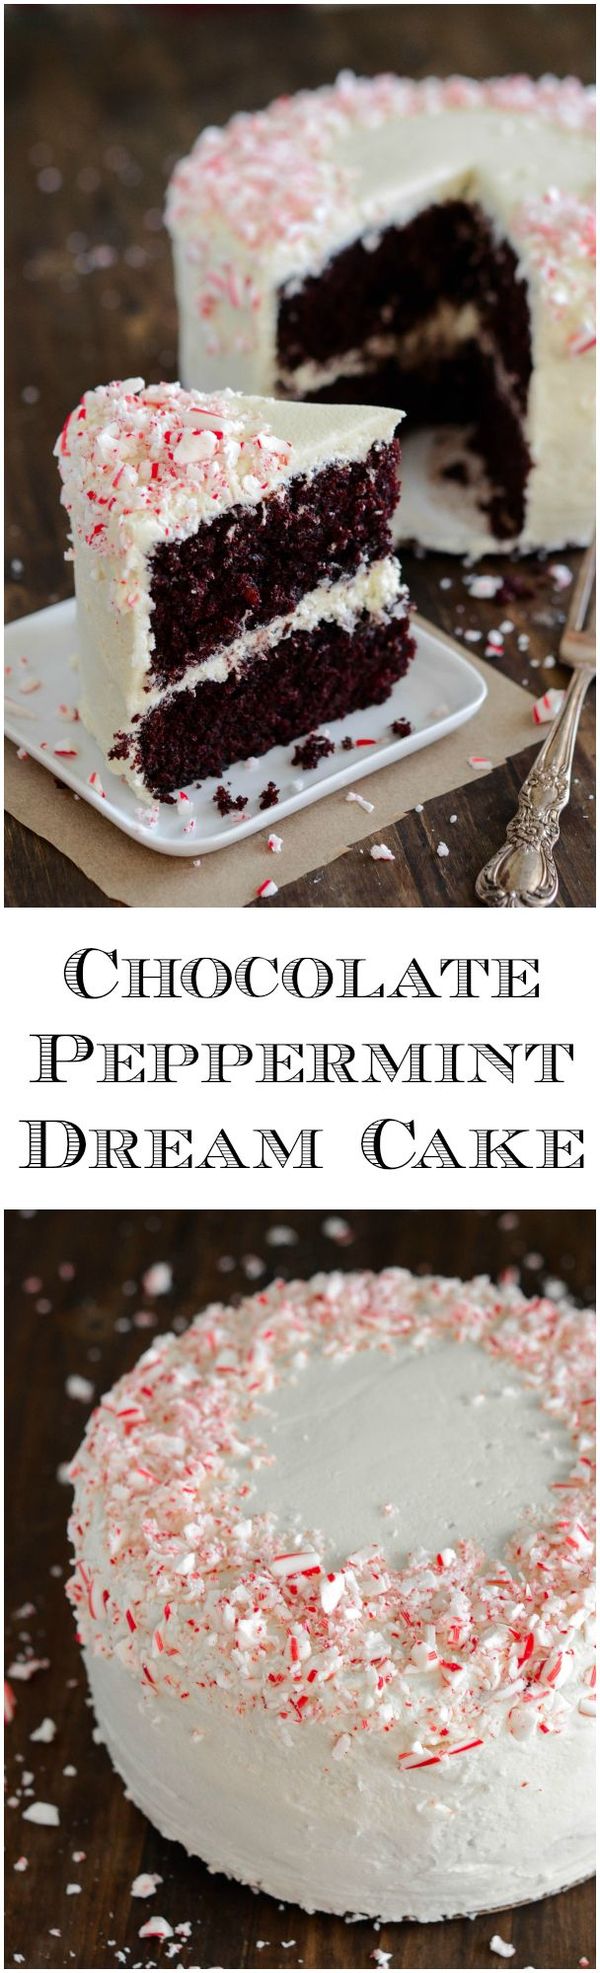 Chocolate Peppermint Dream Cake